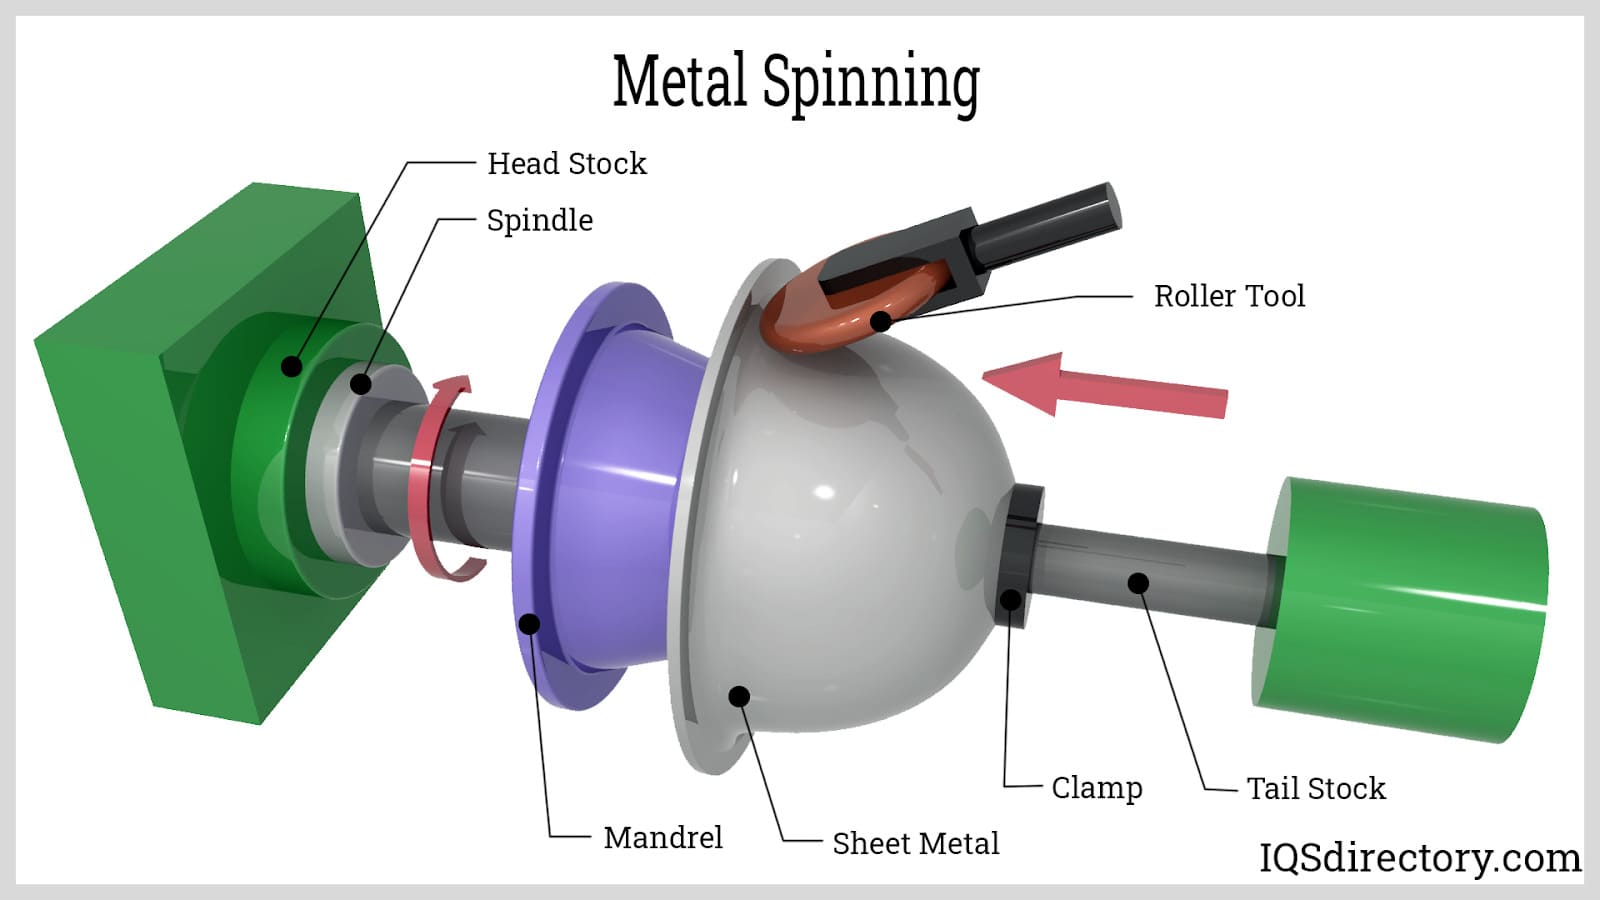 https://www.iqsdirectory.com/articles/metal-spinning/metal-spinning.jpg